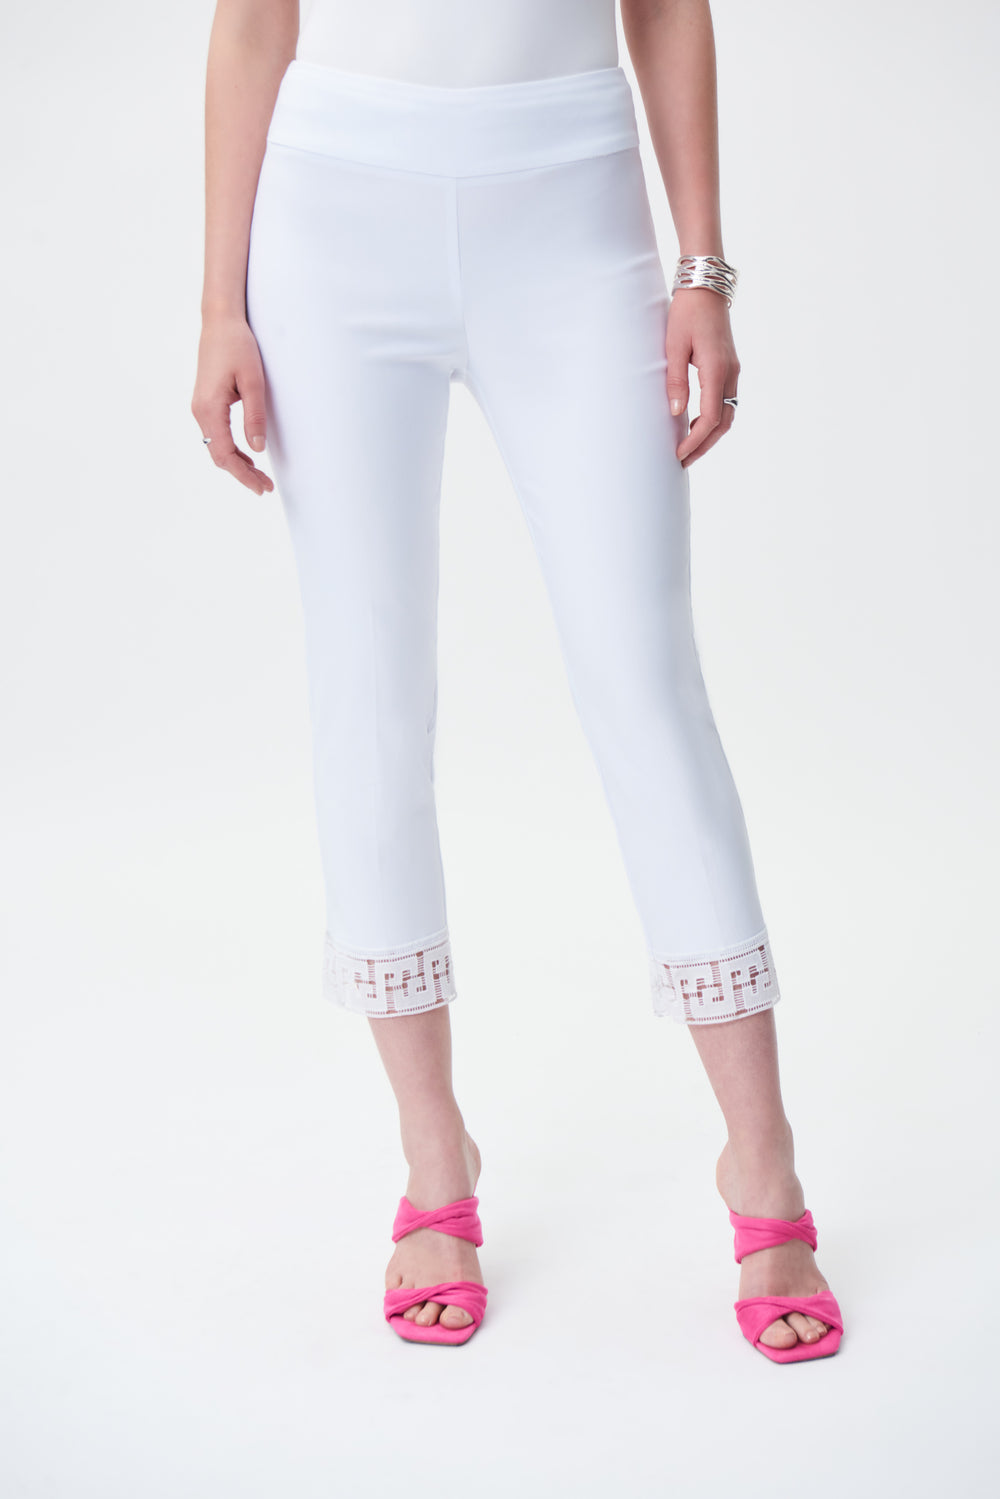 Joseph Ribkoff Spring 2023 women's casual white capri pants - front